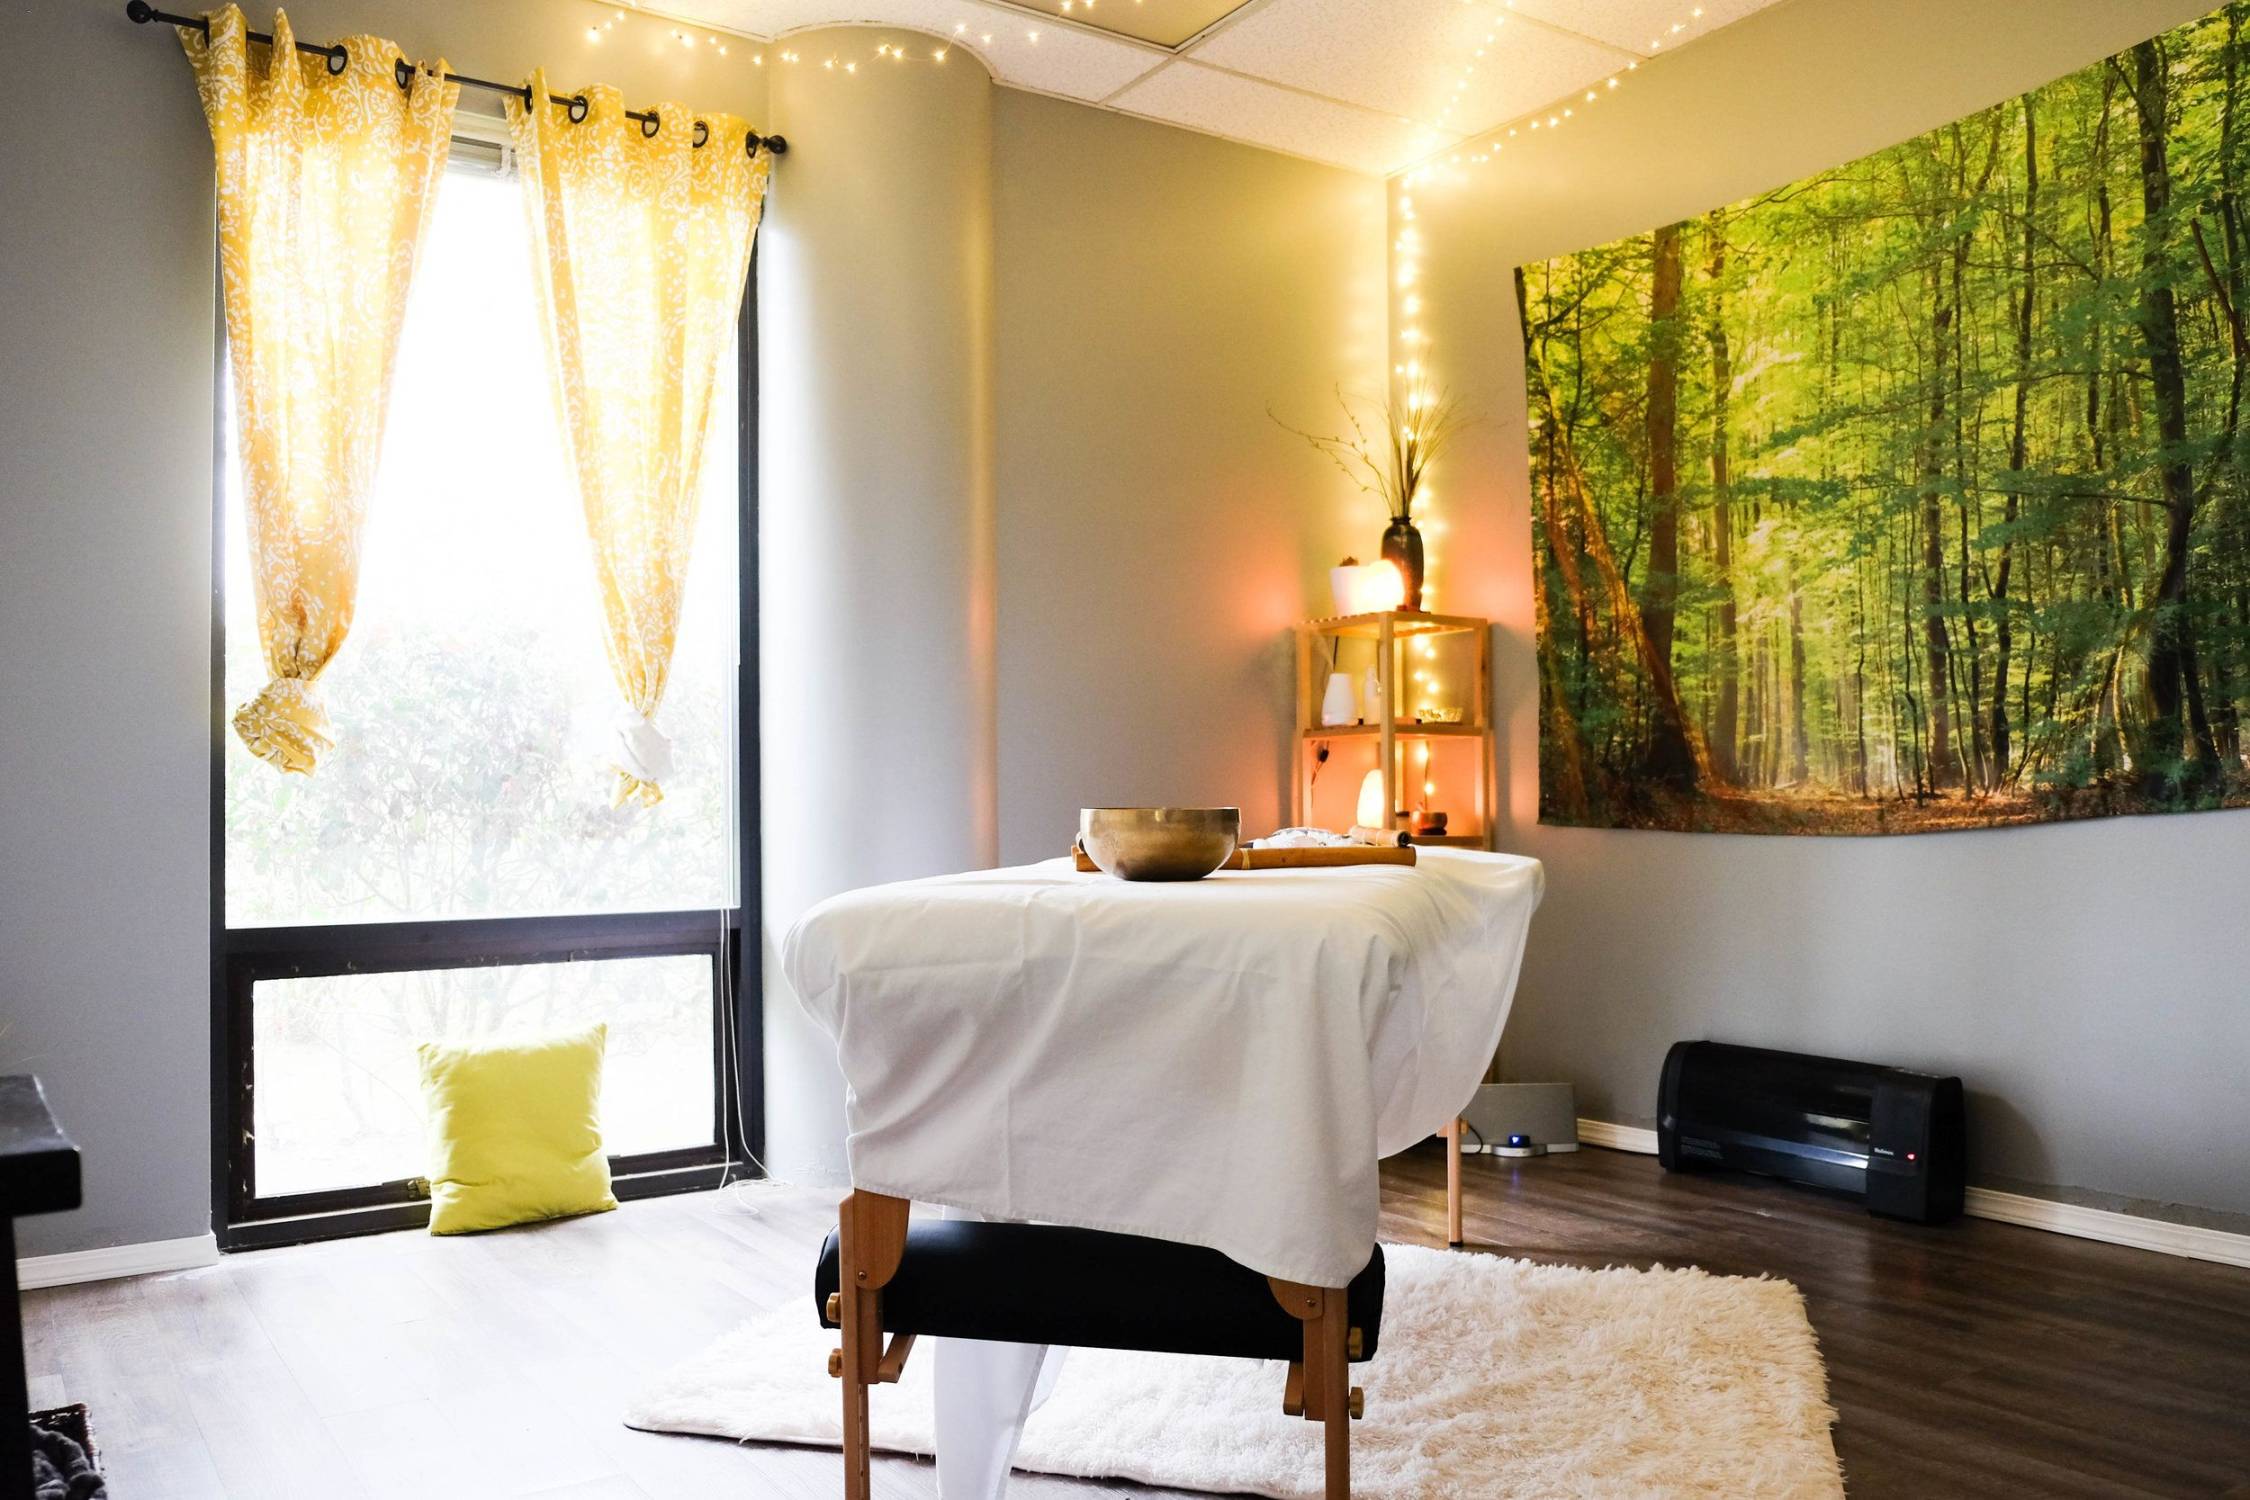 Reiki Healing Room  Healing room, Treatment room, Room decor